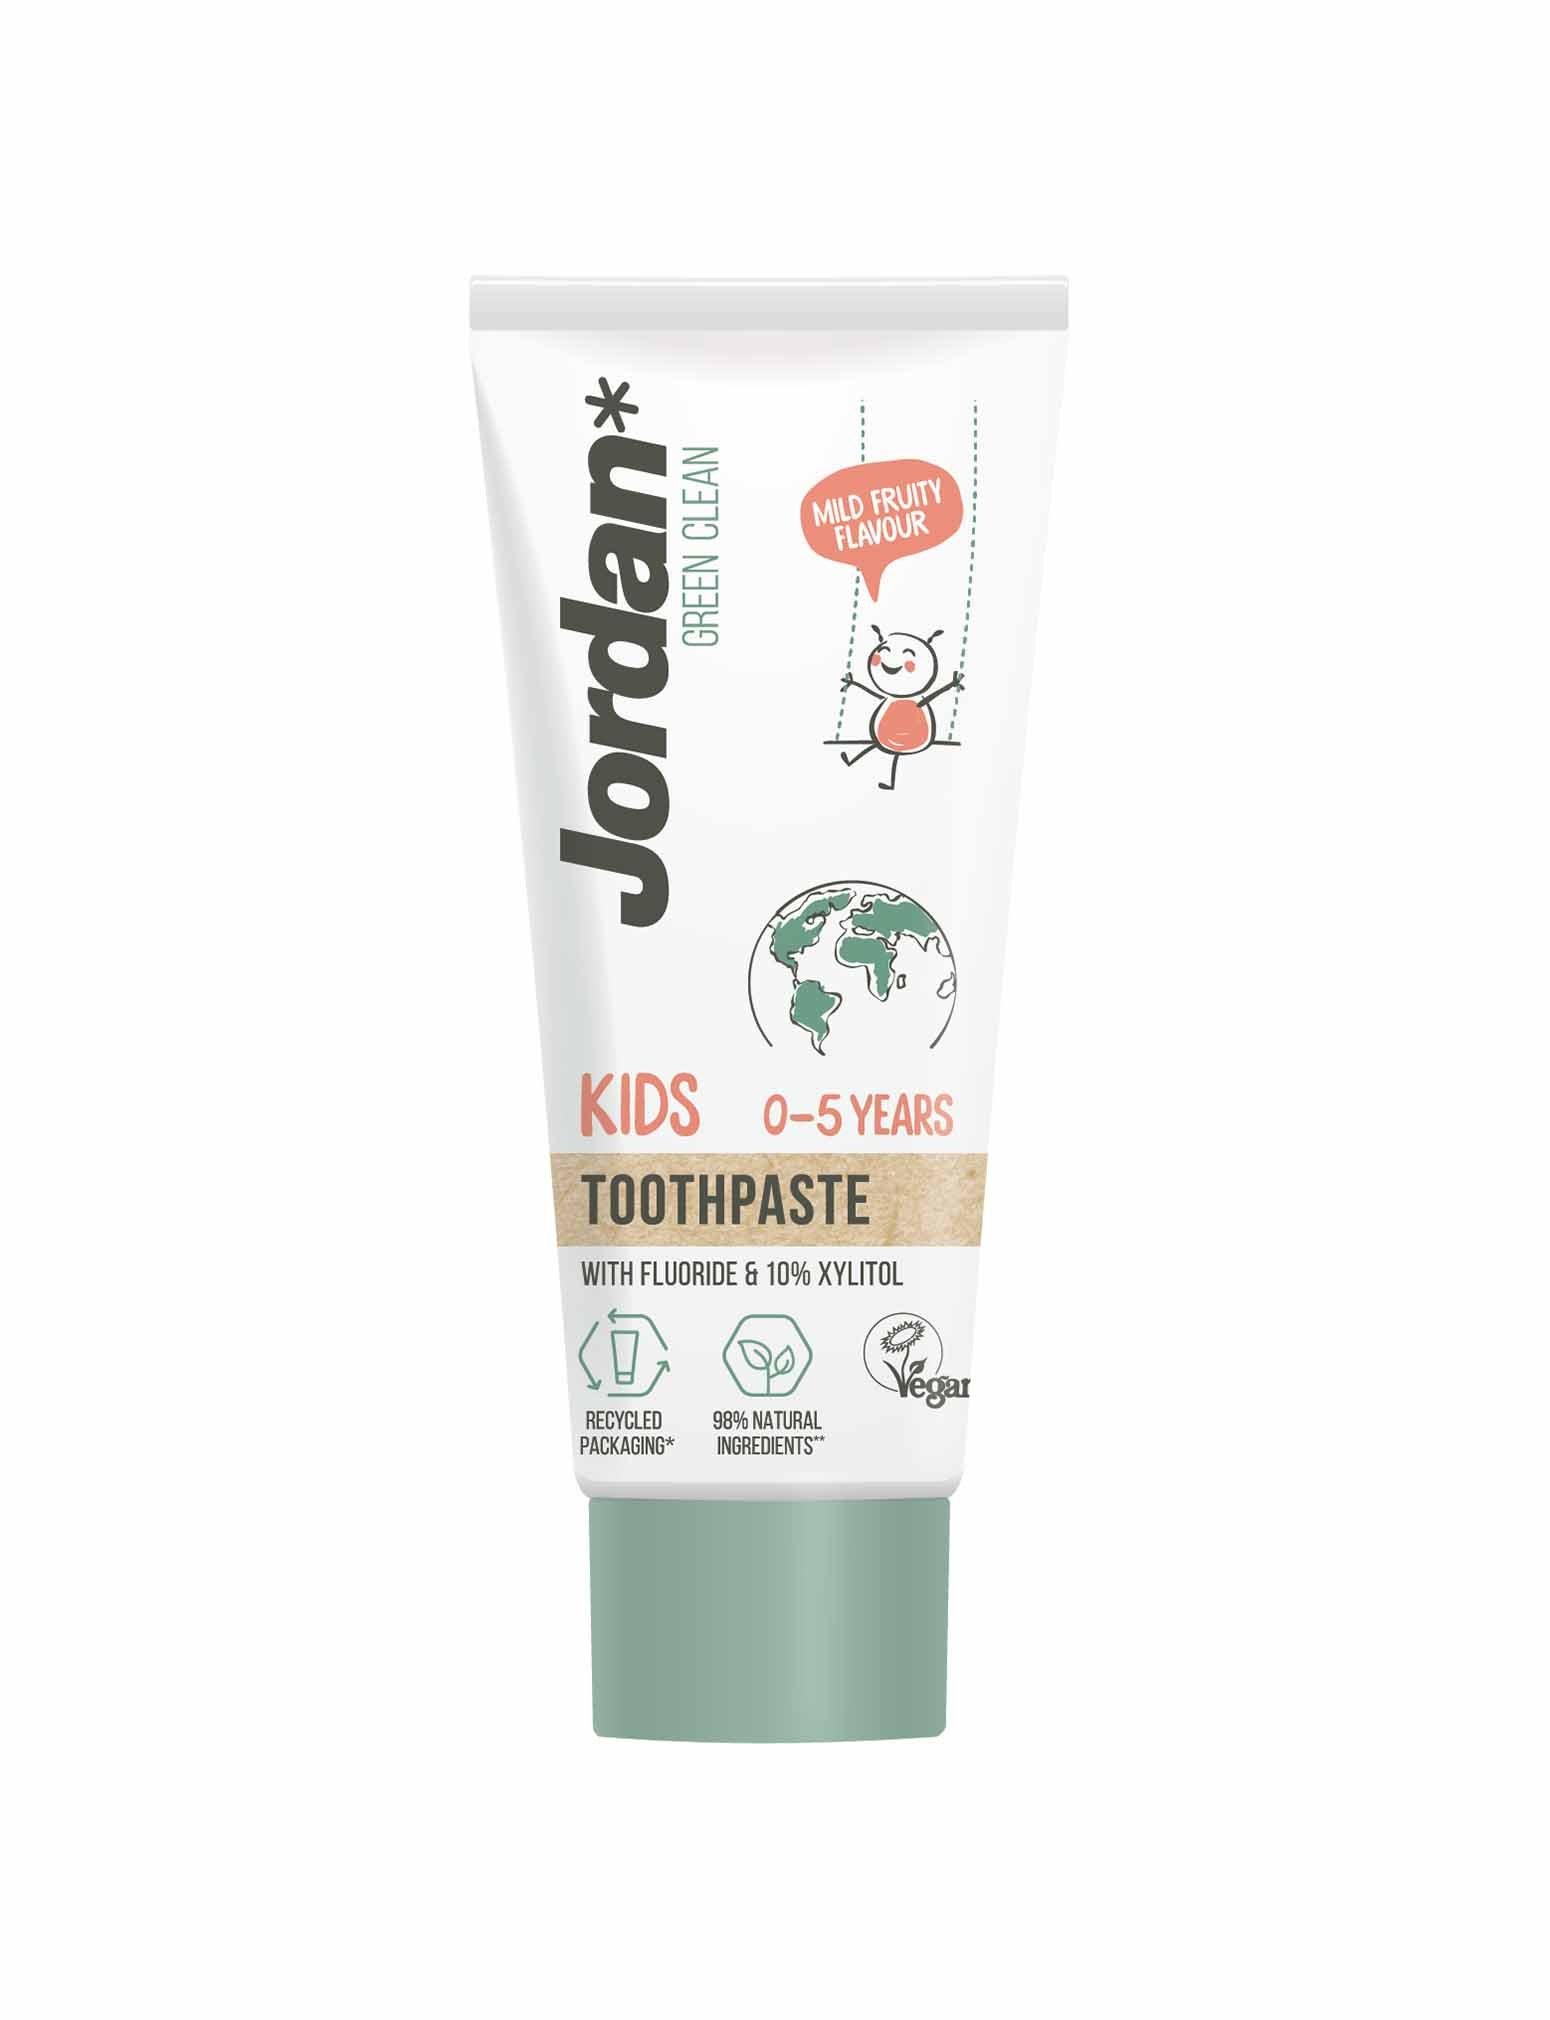 Зубная паста Jordan Green Clean для детей 0-5 лет 50 мл (57000097)